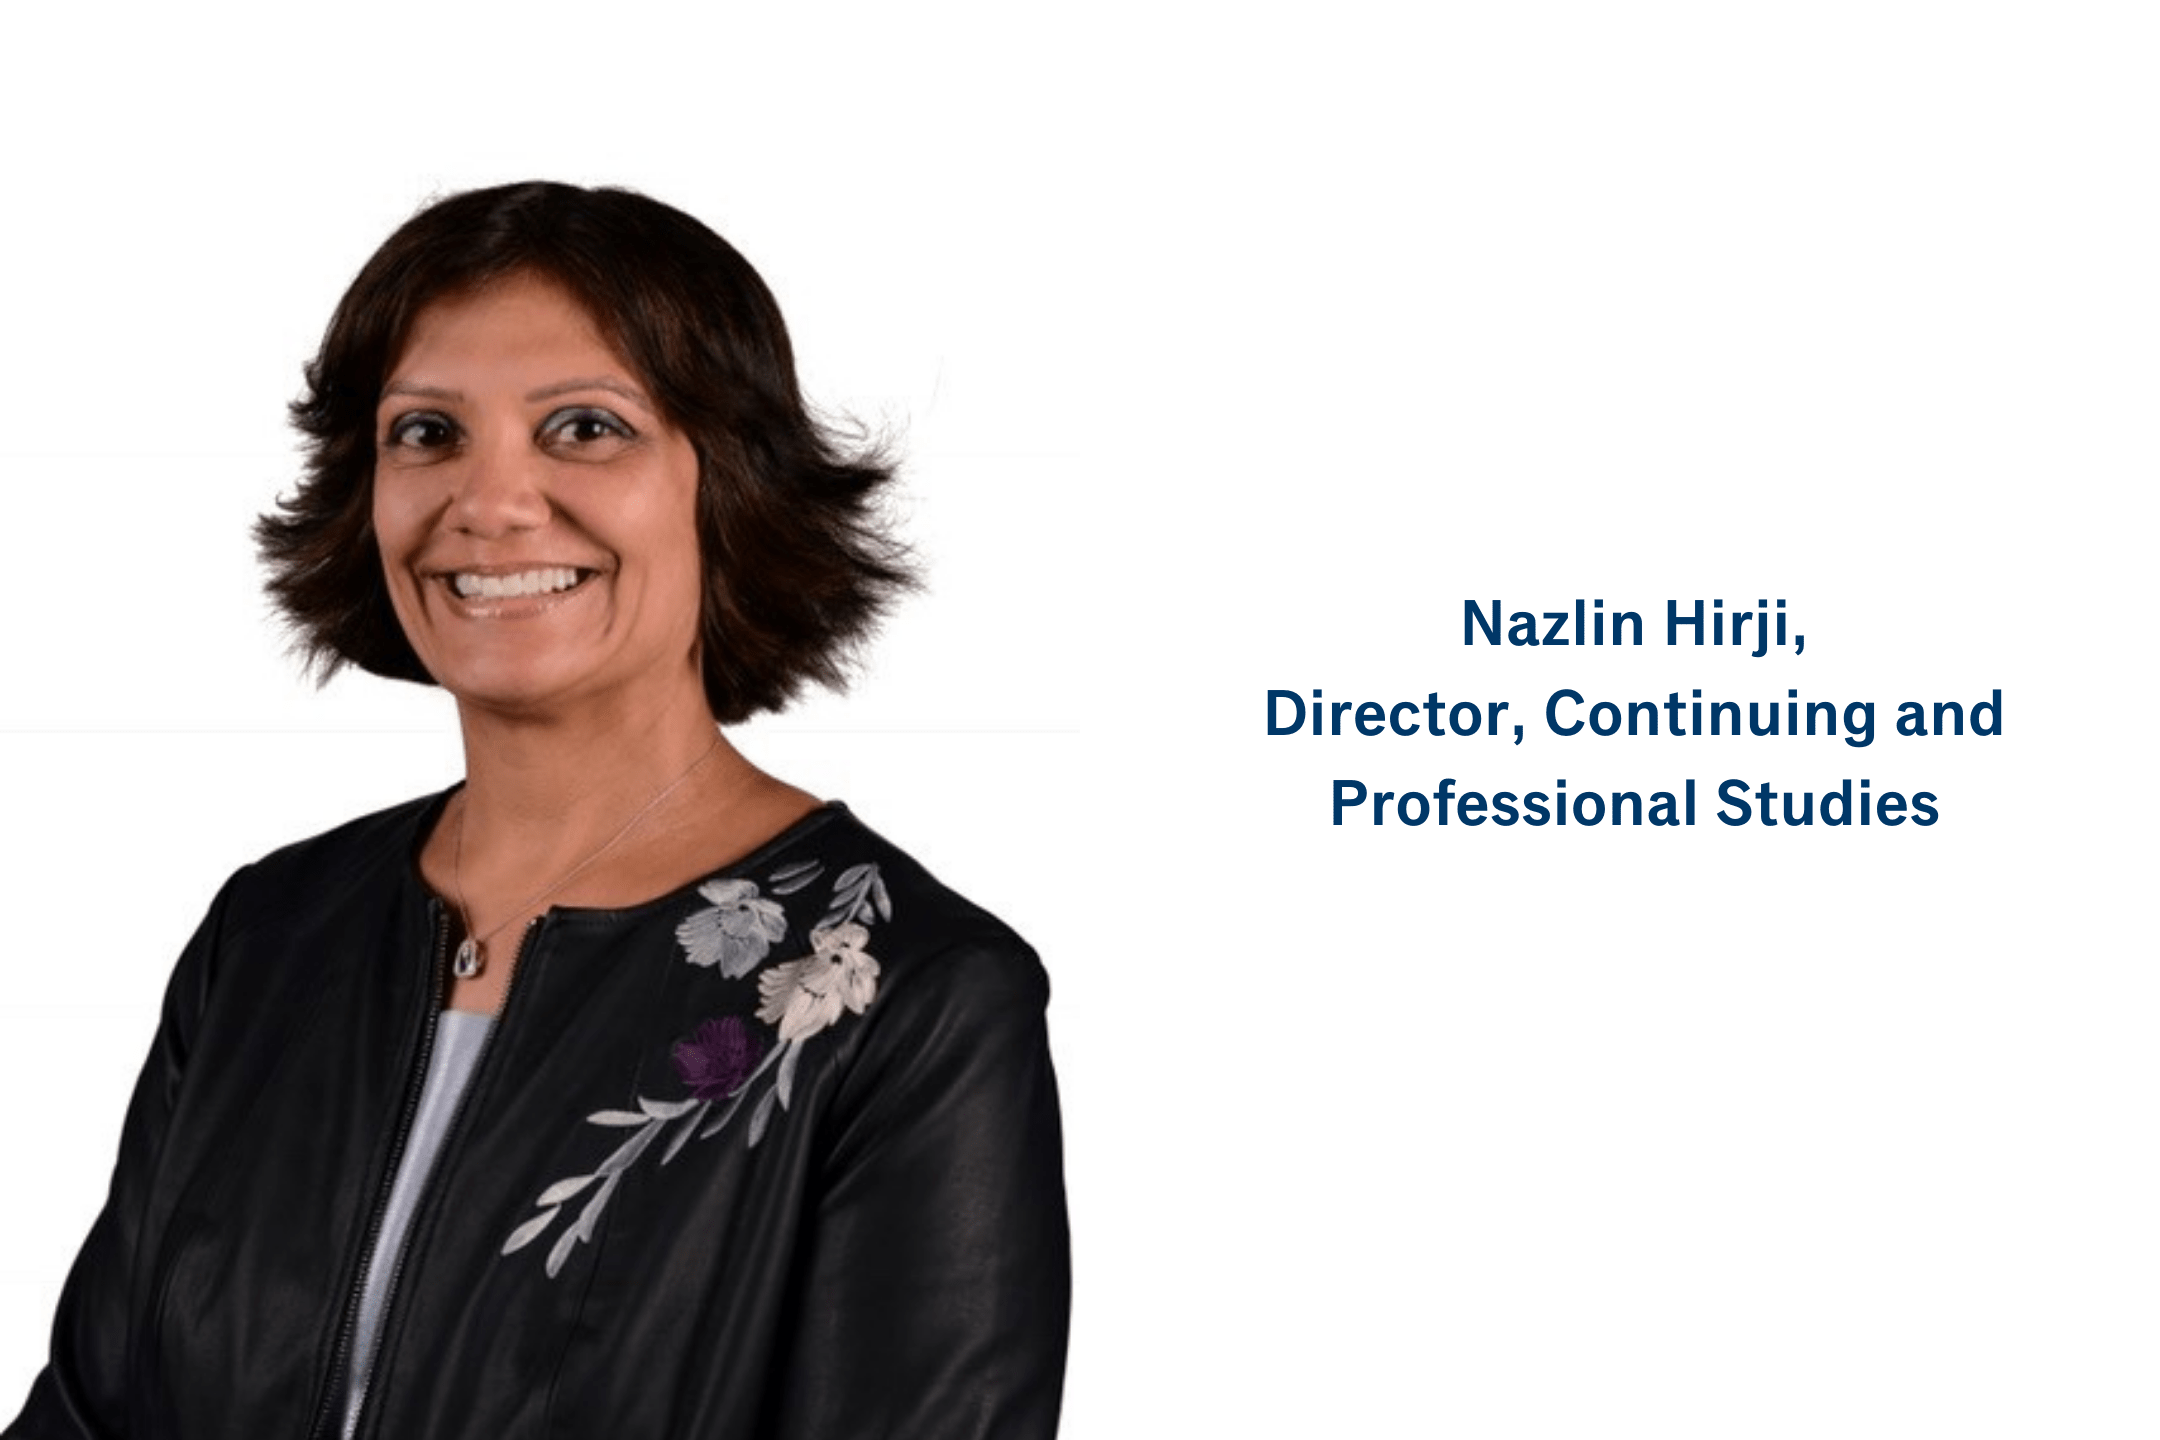 Nazlin Hirji, Director of Continuing and Professional Studies